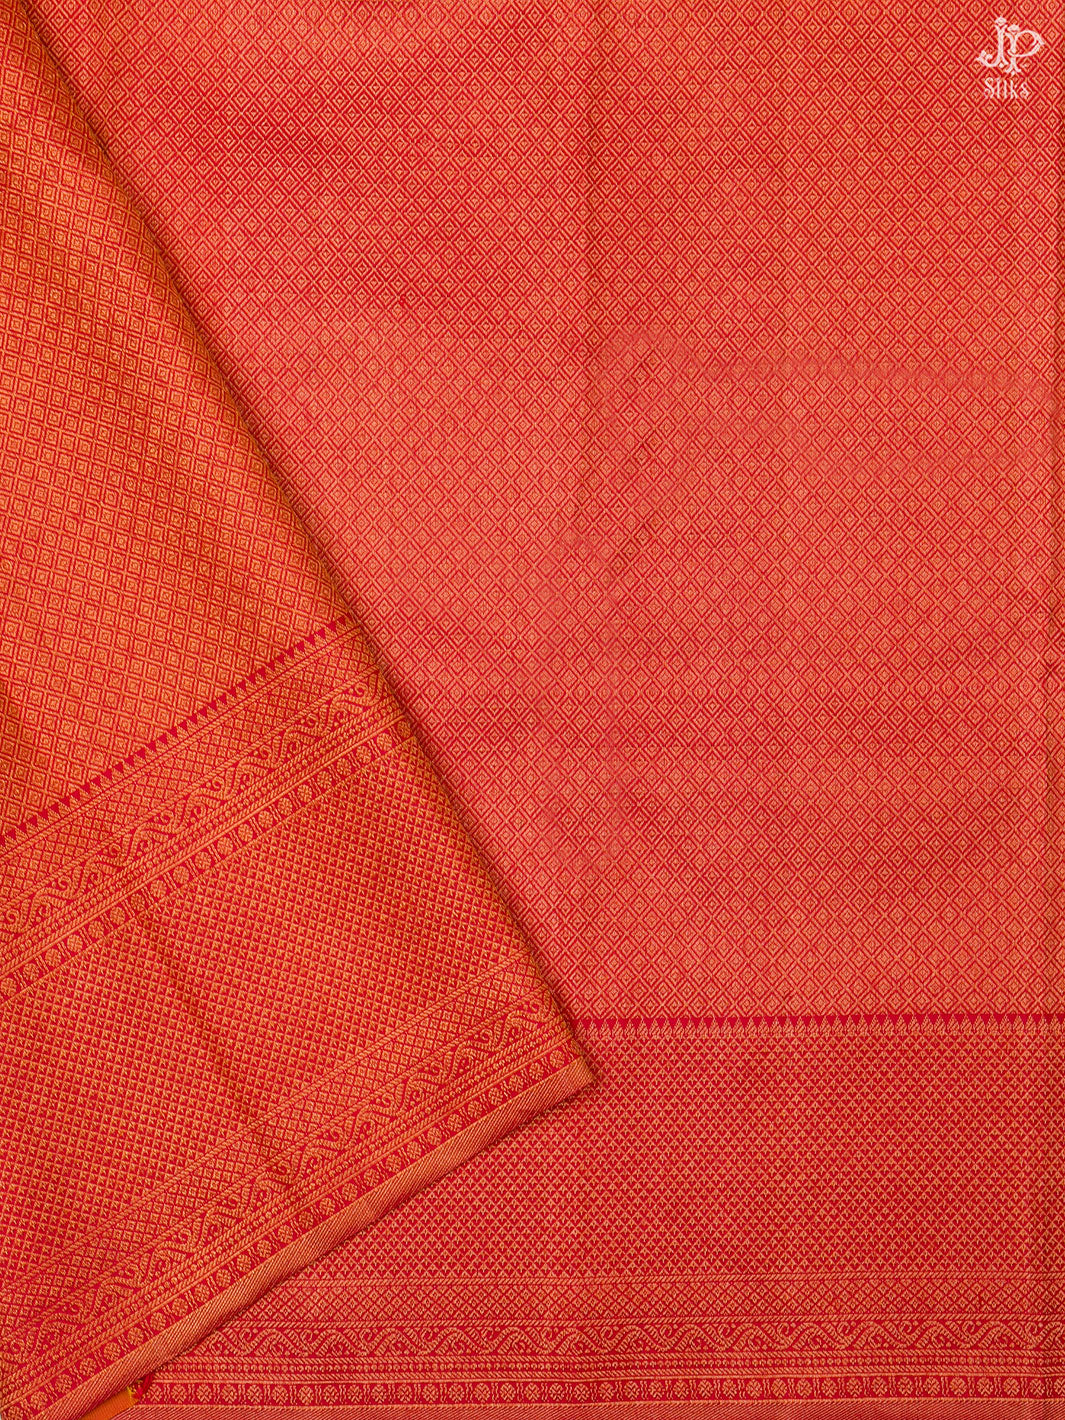 Olive Green Shot Red Kanchipuram Silk Saree - D7765 - View 4